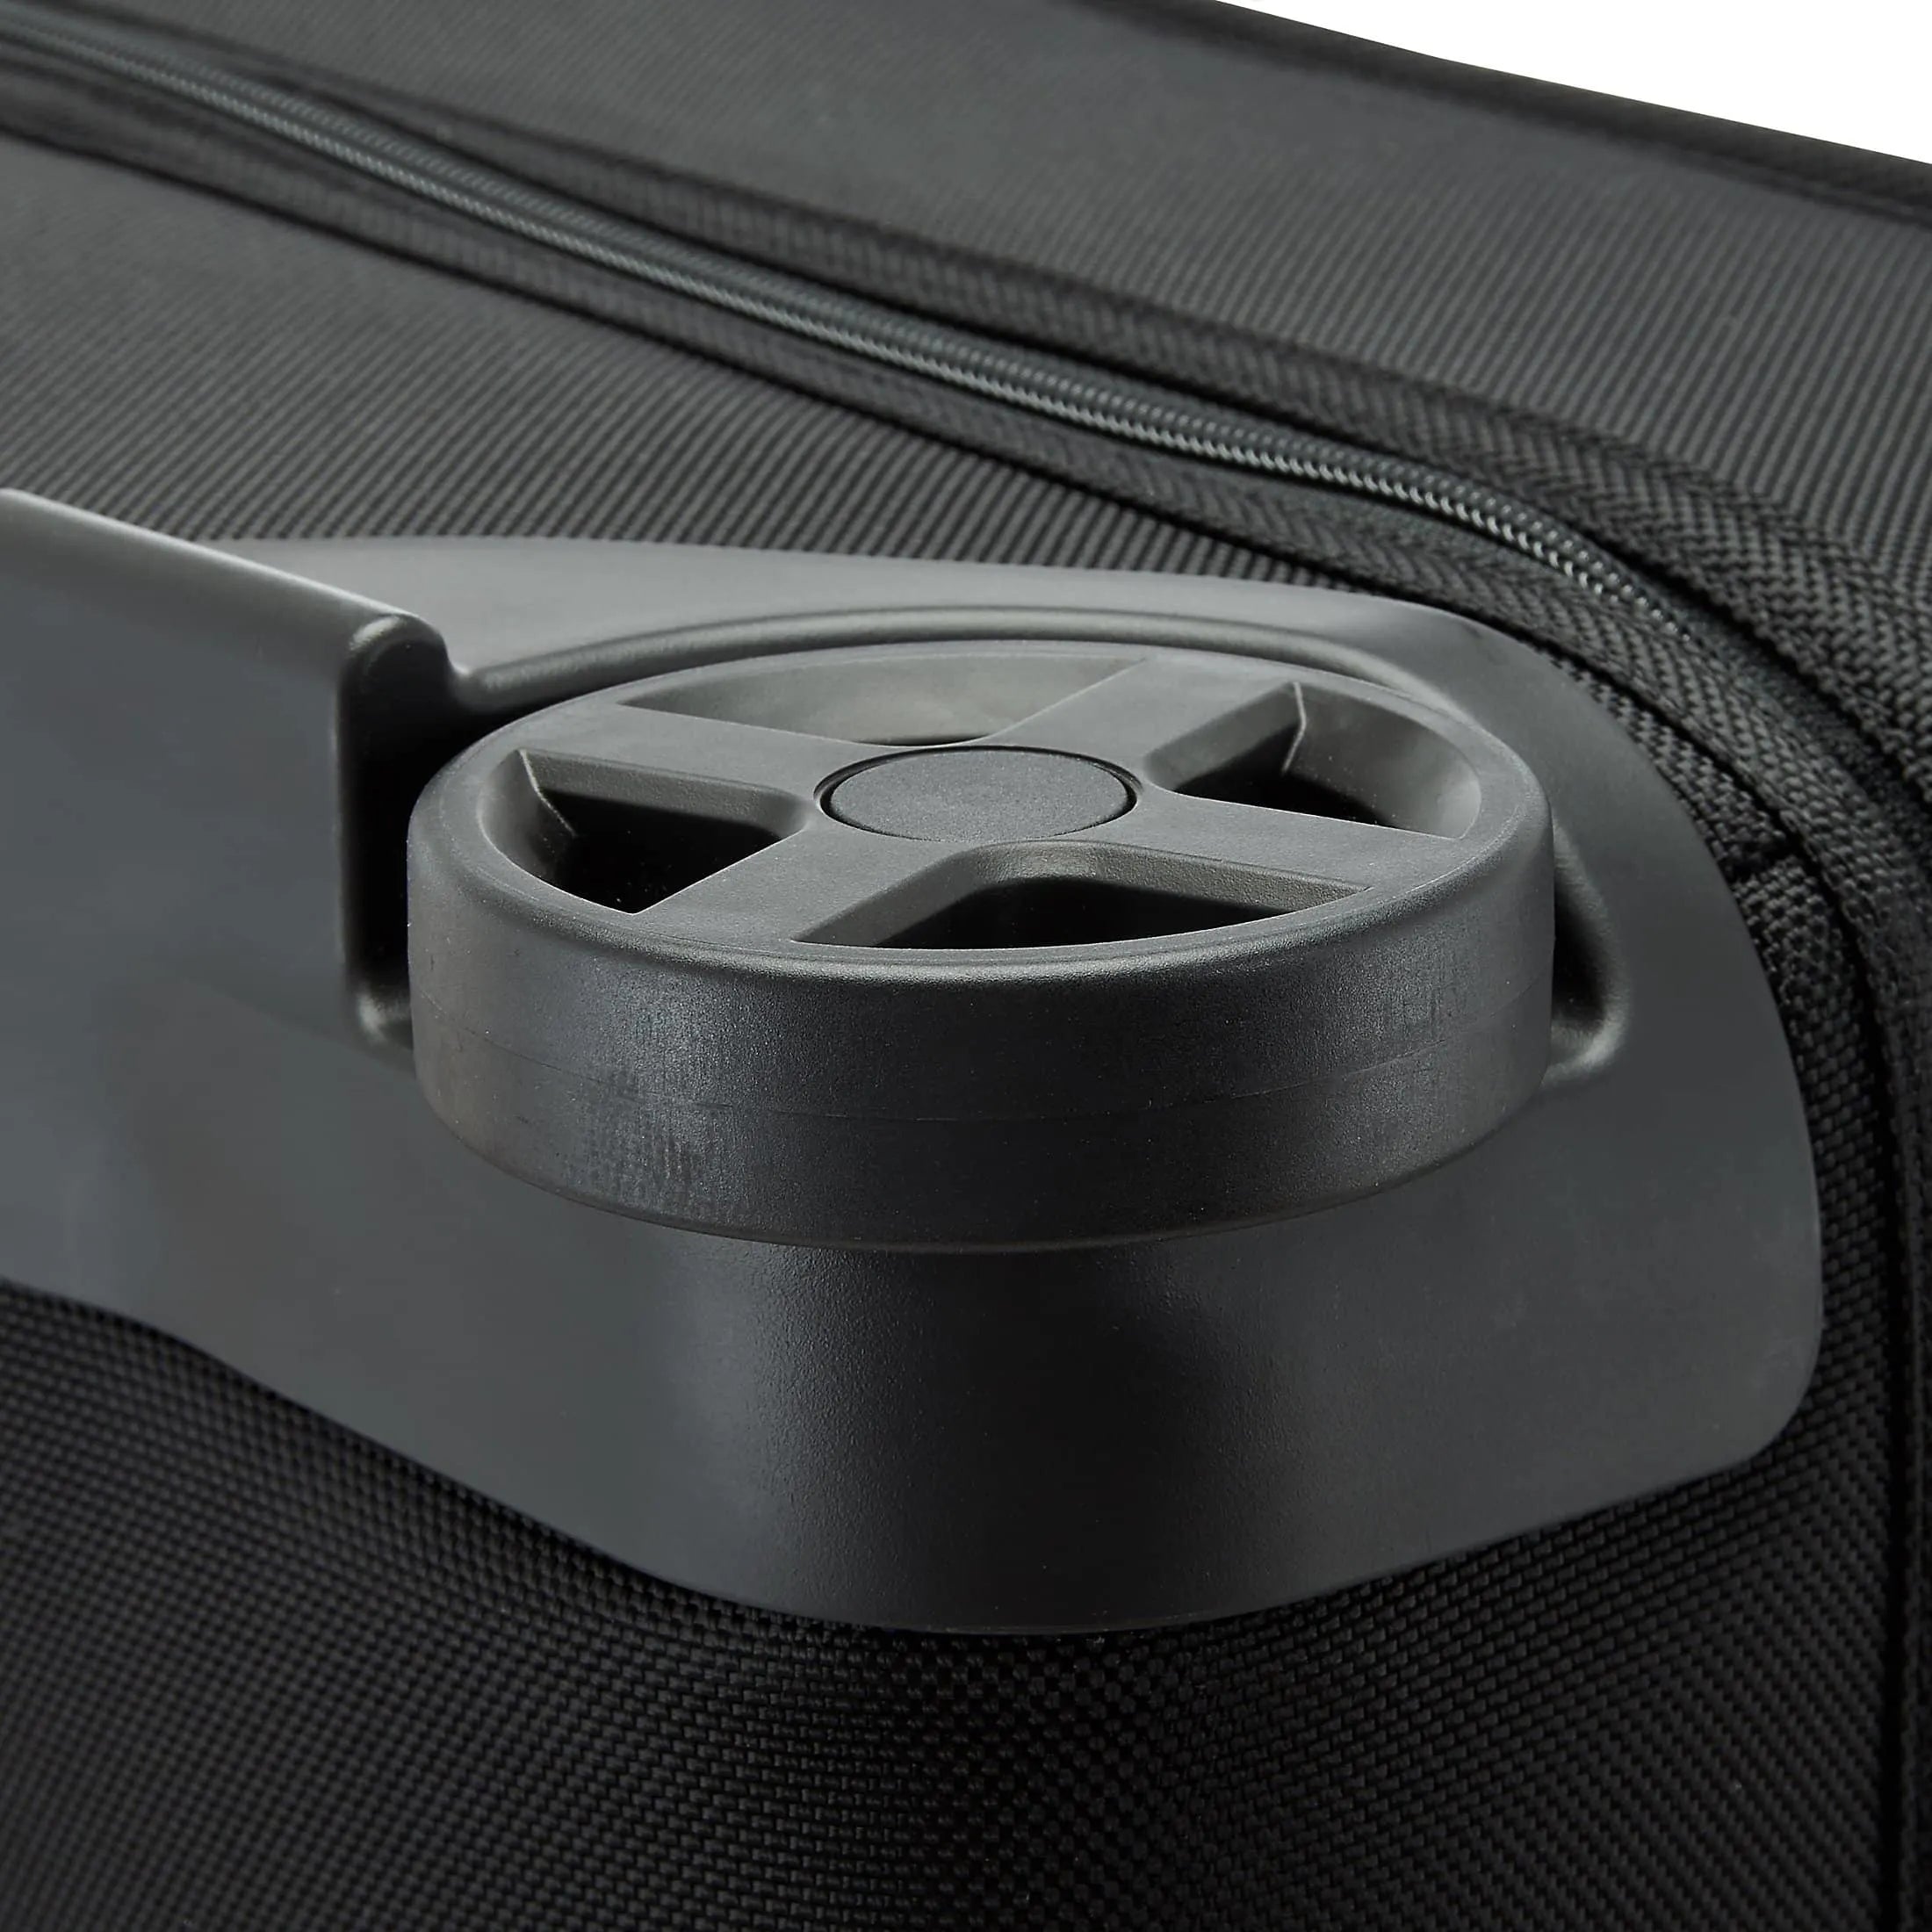 Victorinox Werks Traveler 6.0 garment bag on wheels 55 cm - black